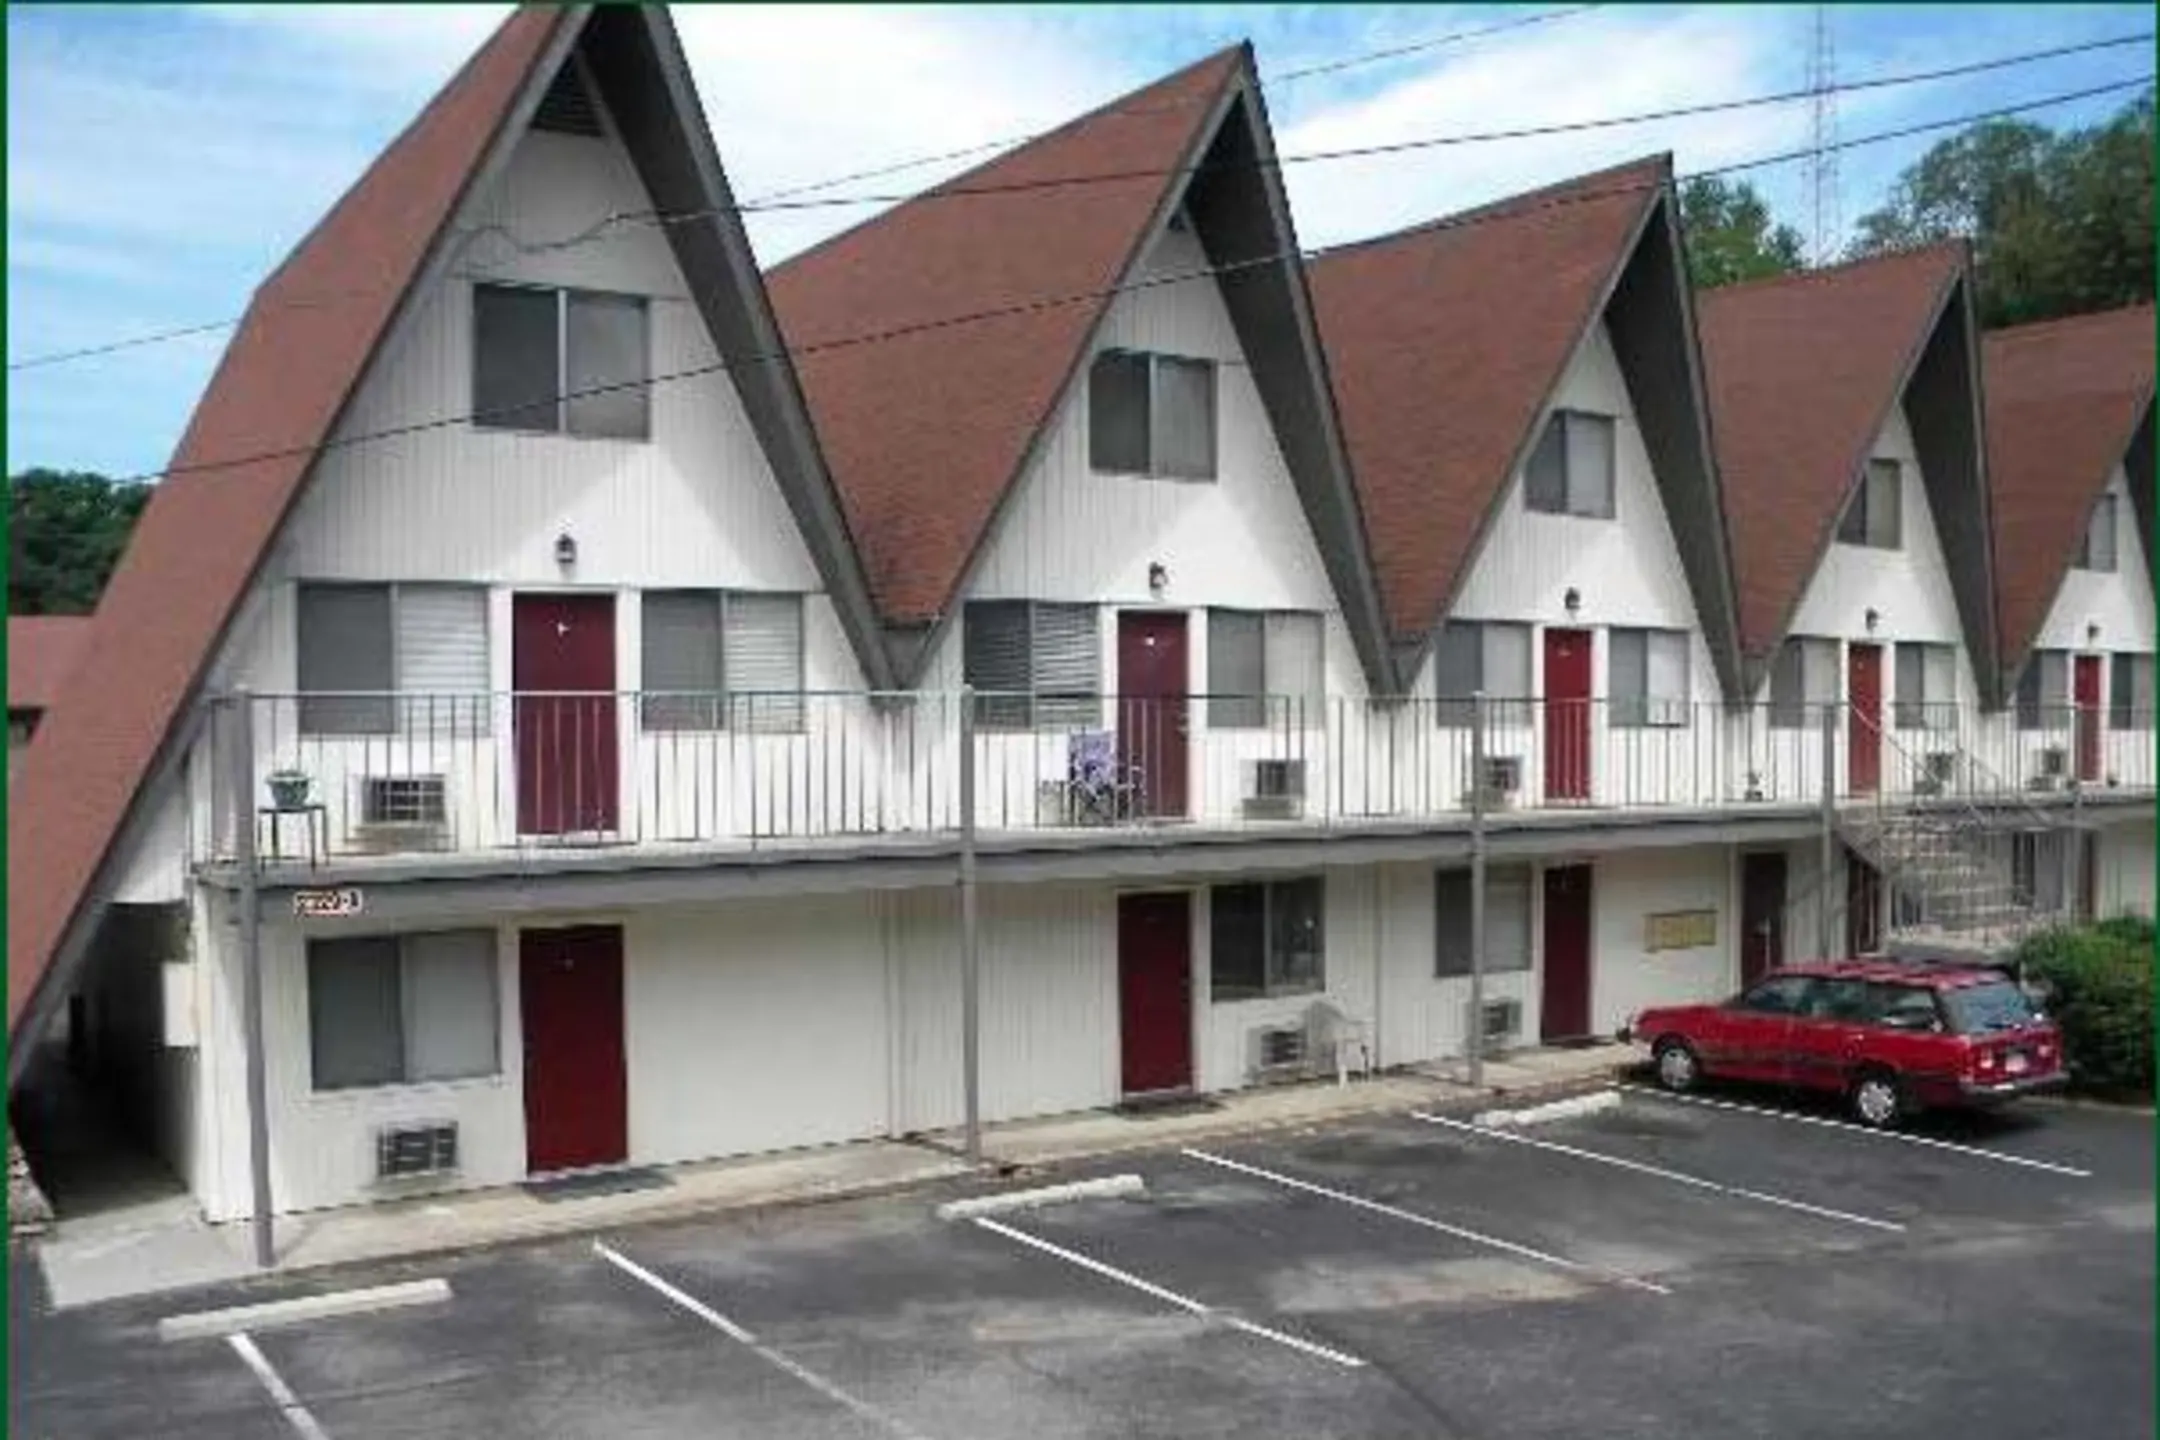 Building - Brandywine Apartments - Roanoke, VA